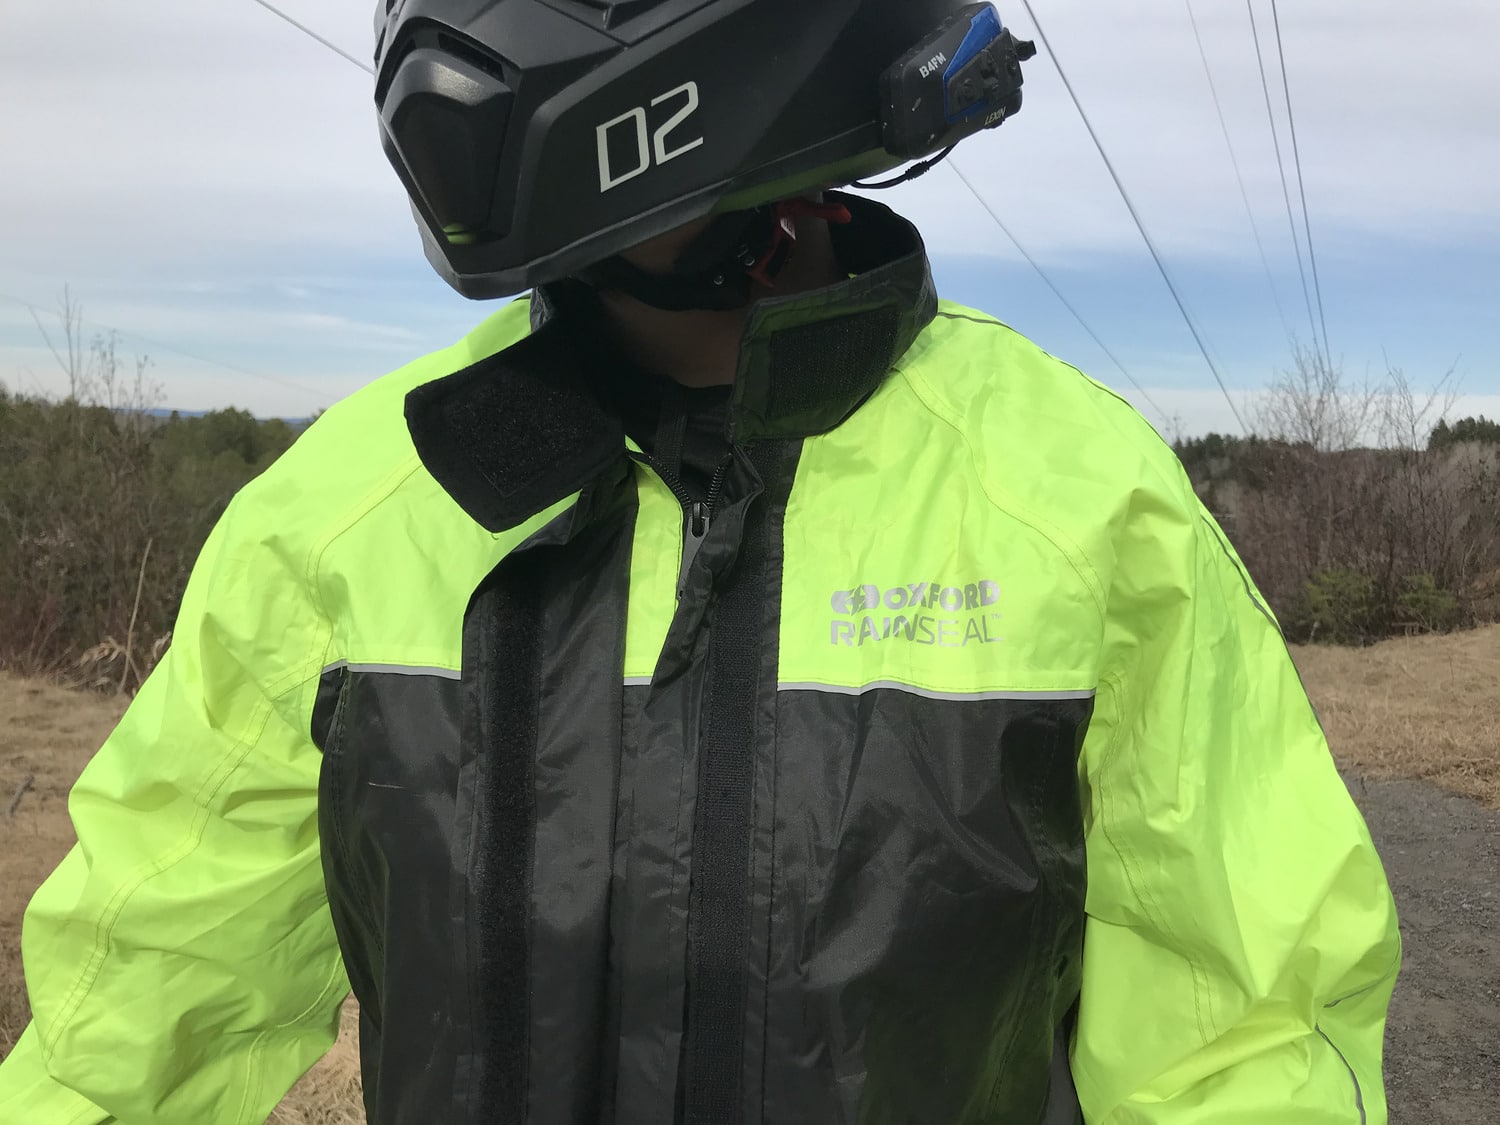 appreciable level of comfortL: raincoat for quad riding